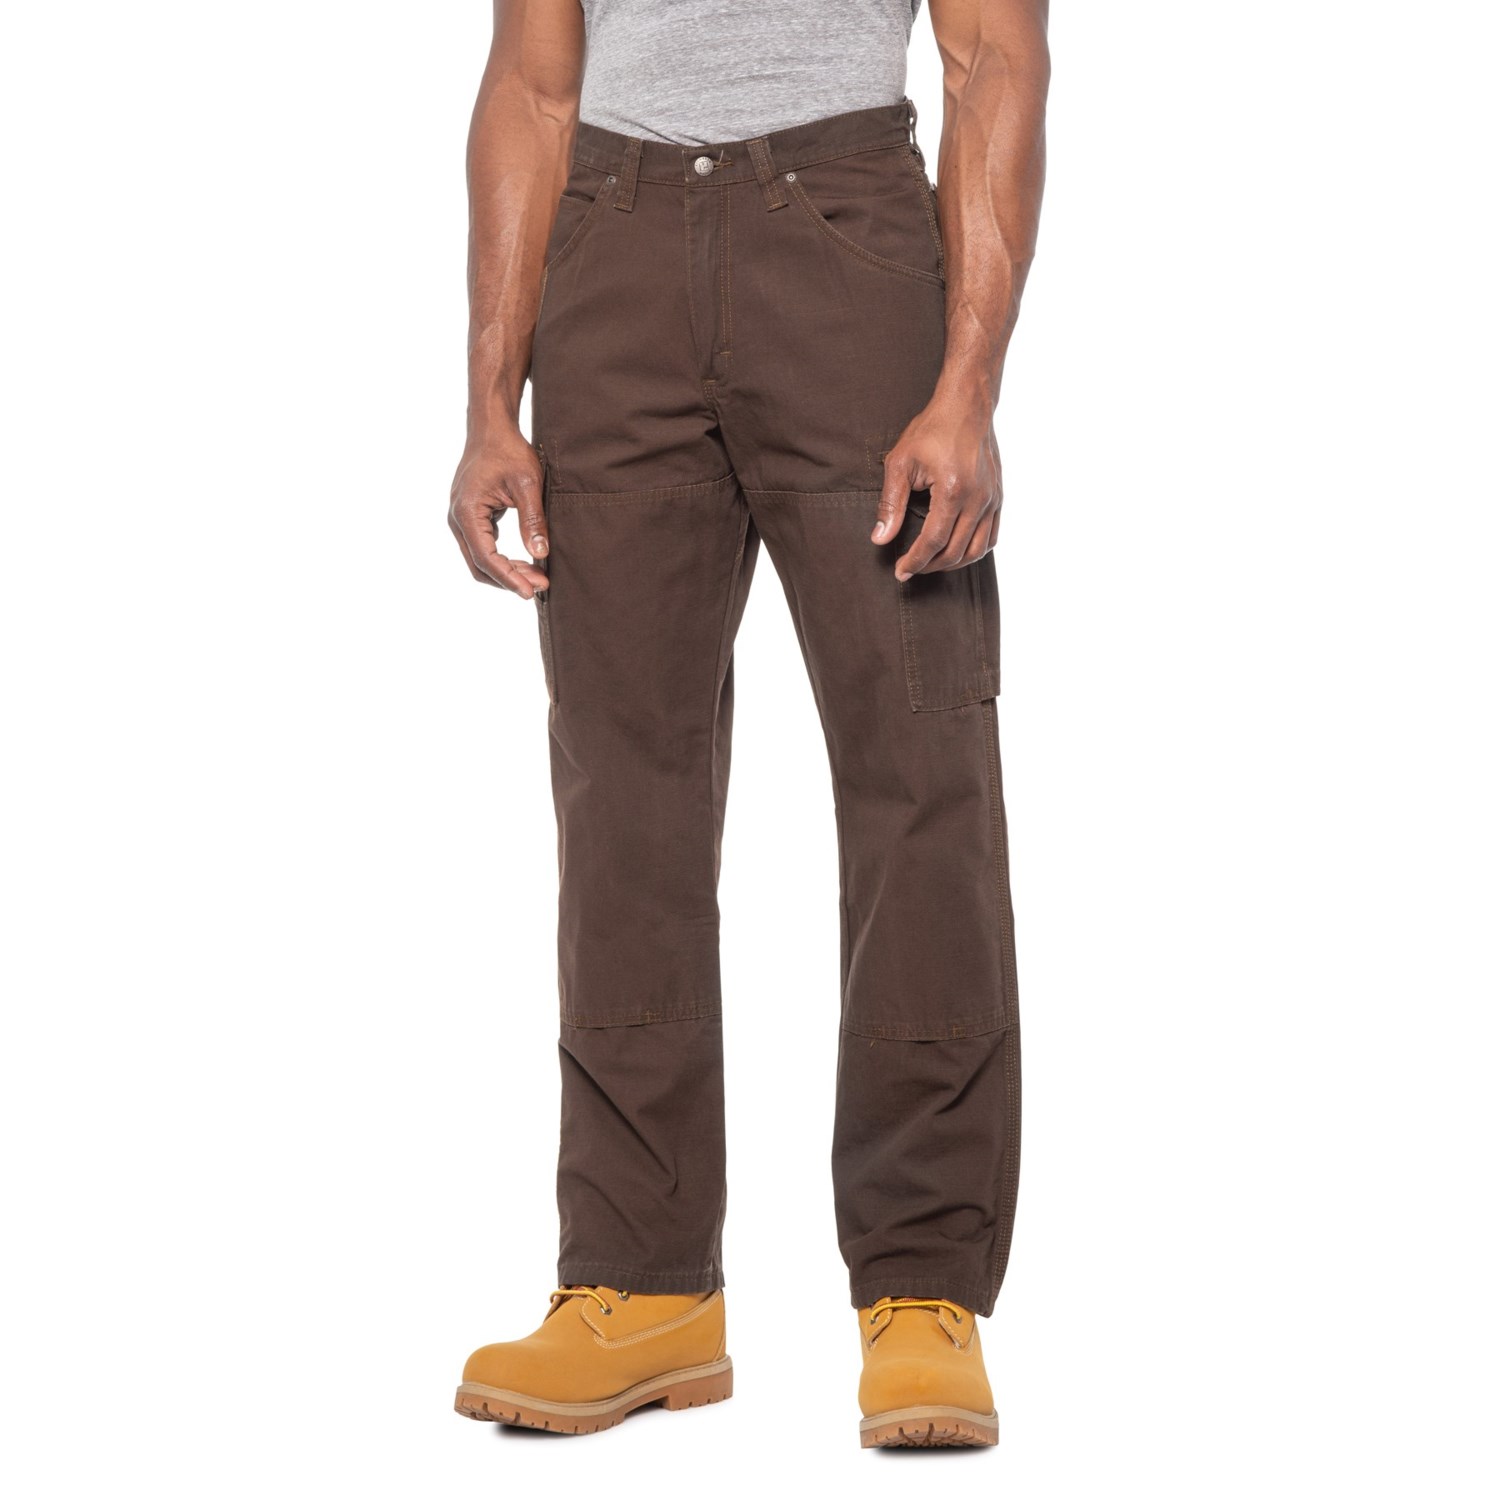 Riggs Ranger Cargo Pants (For Men) - Save 78%